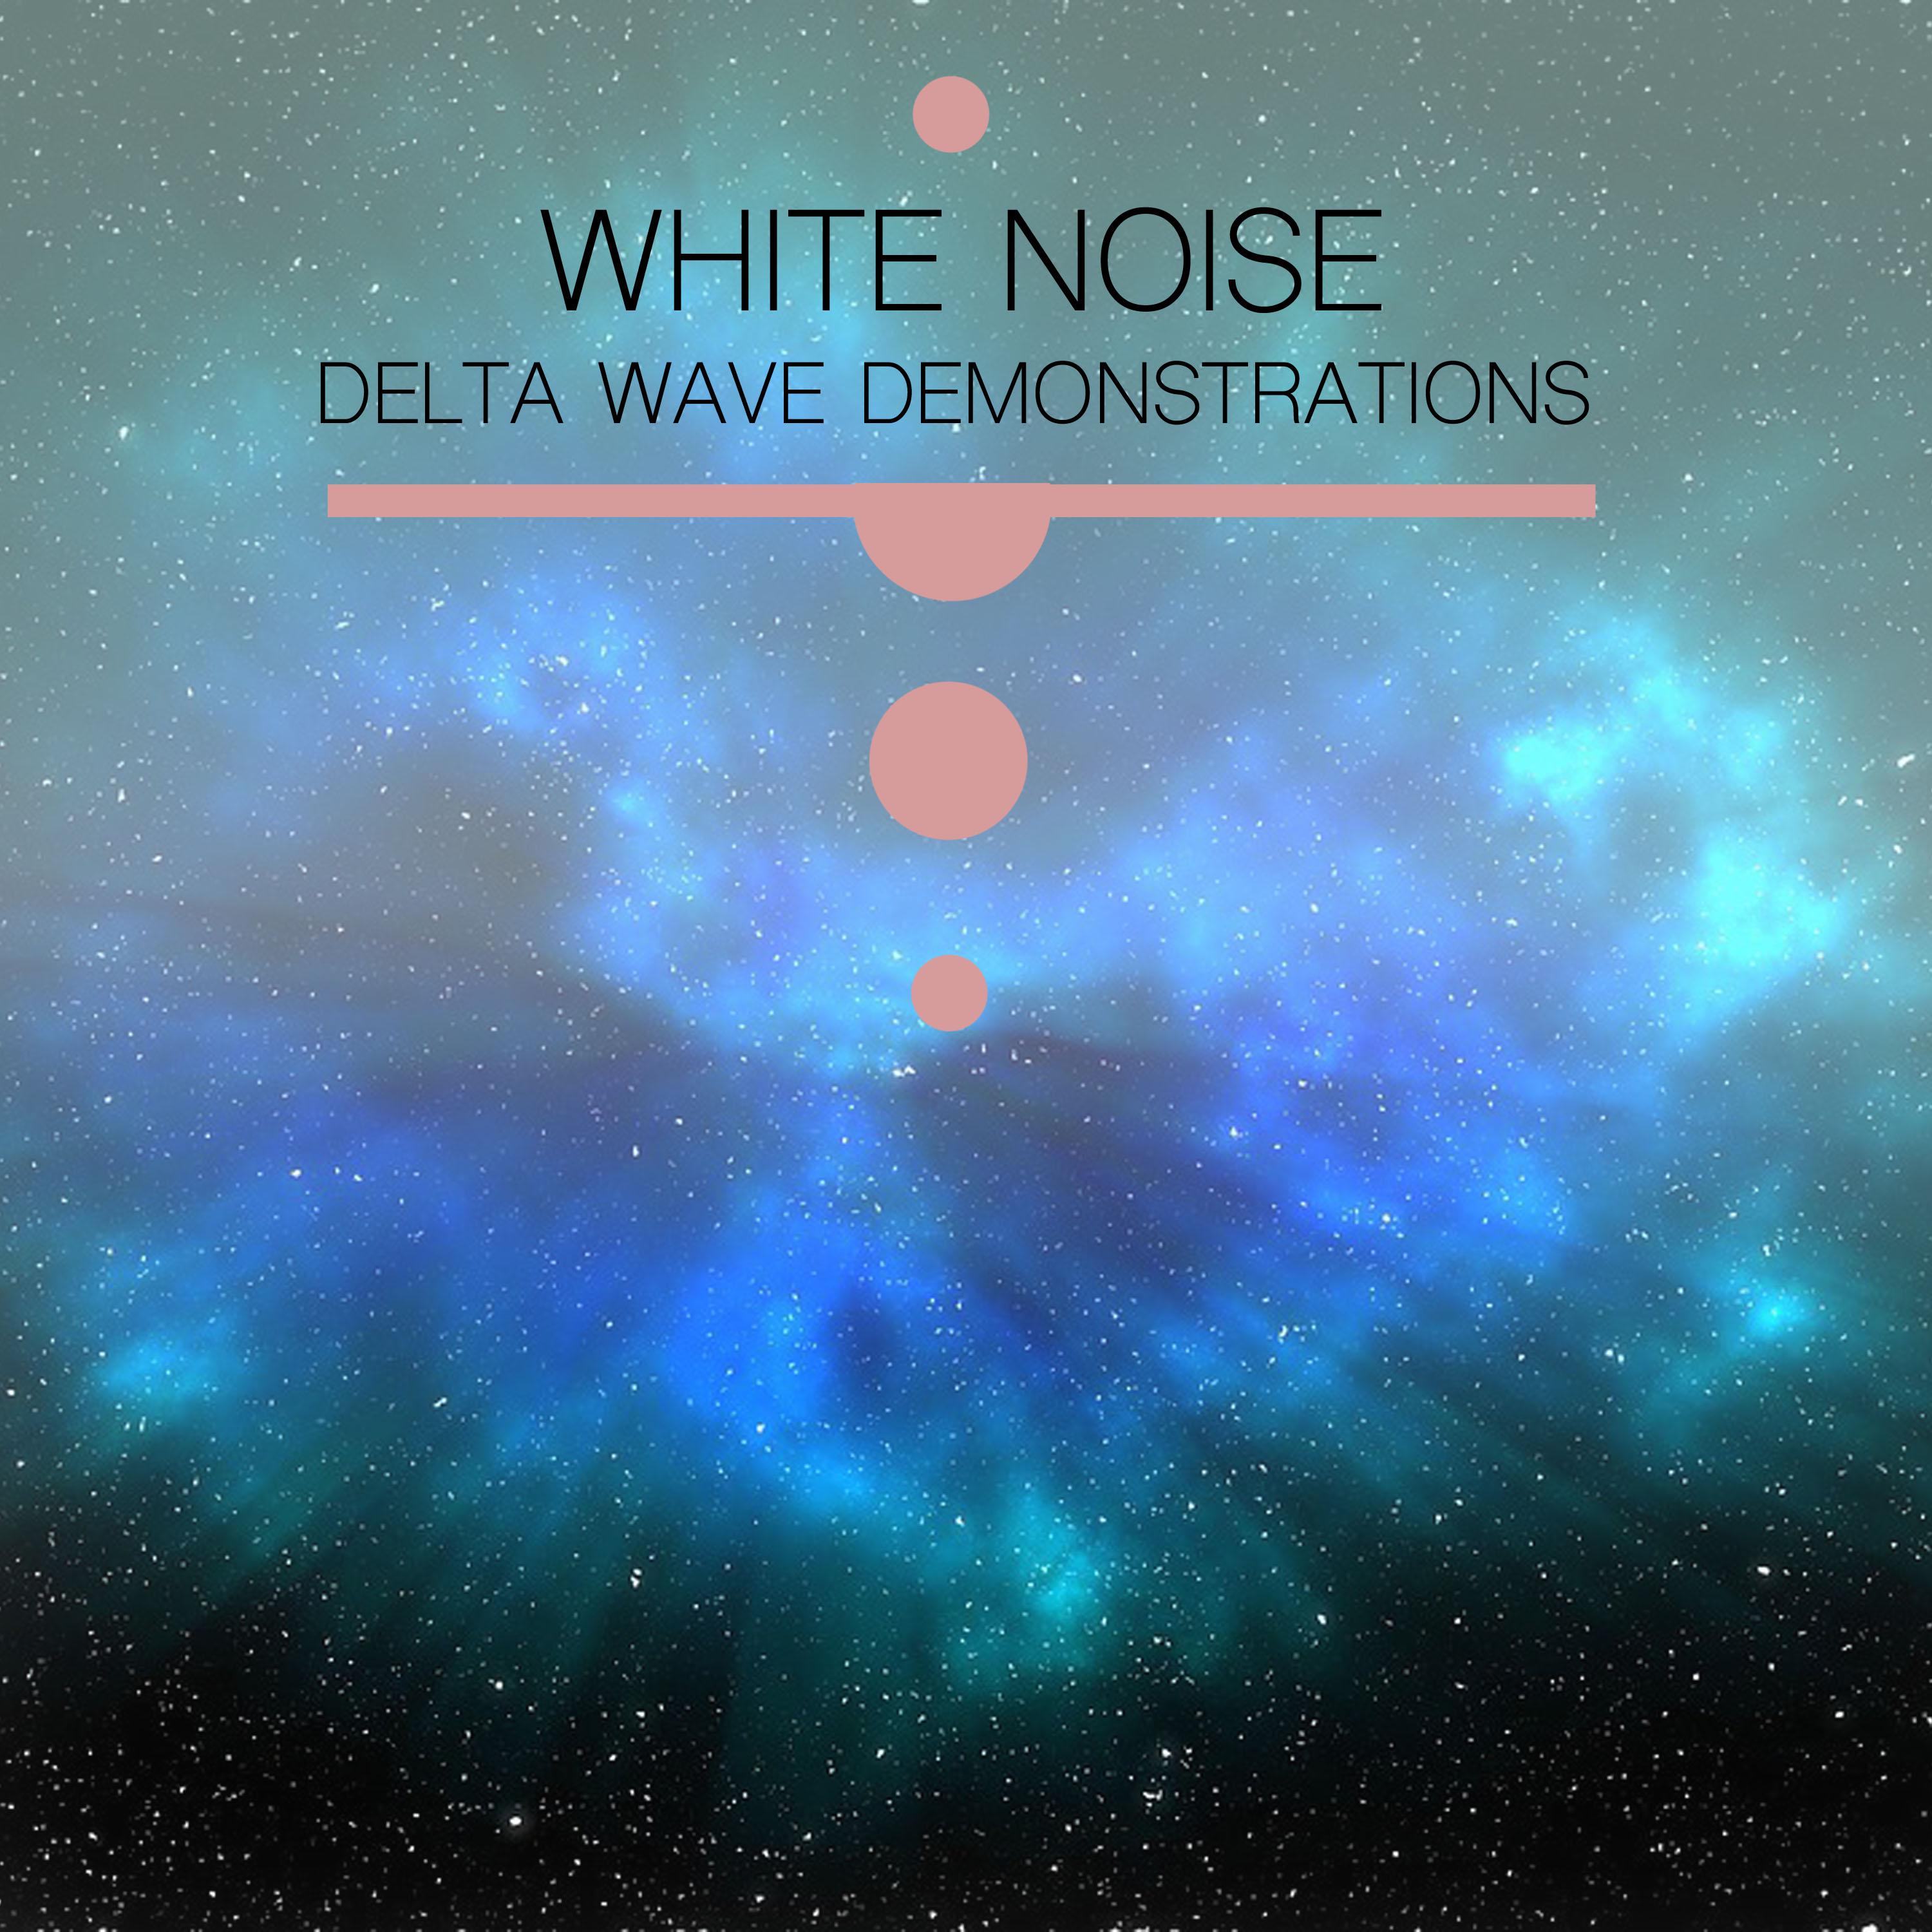 12 White Noise Delta Wave Demonstrations